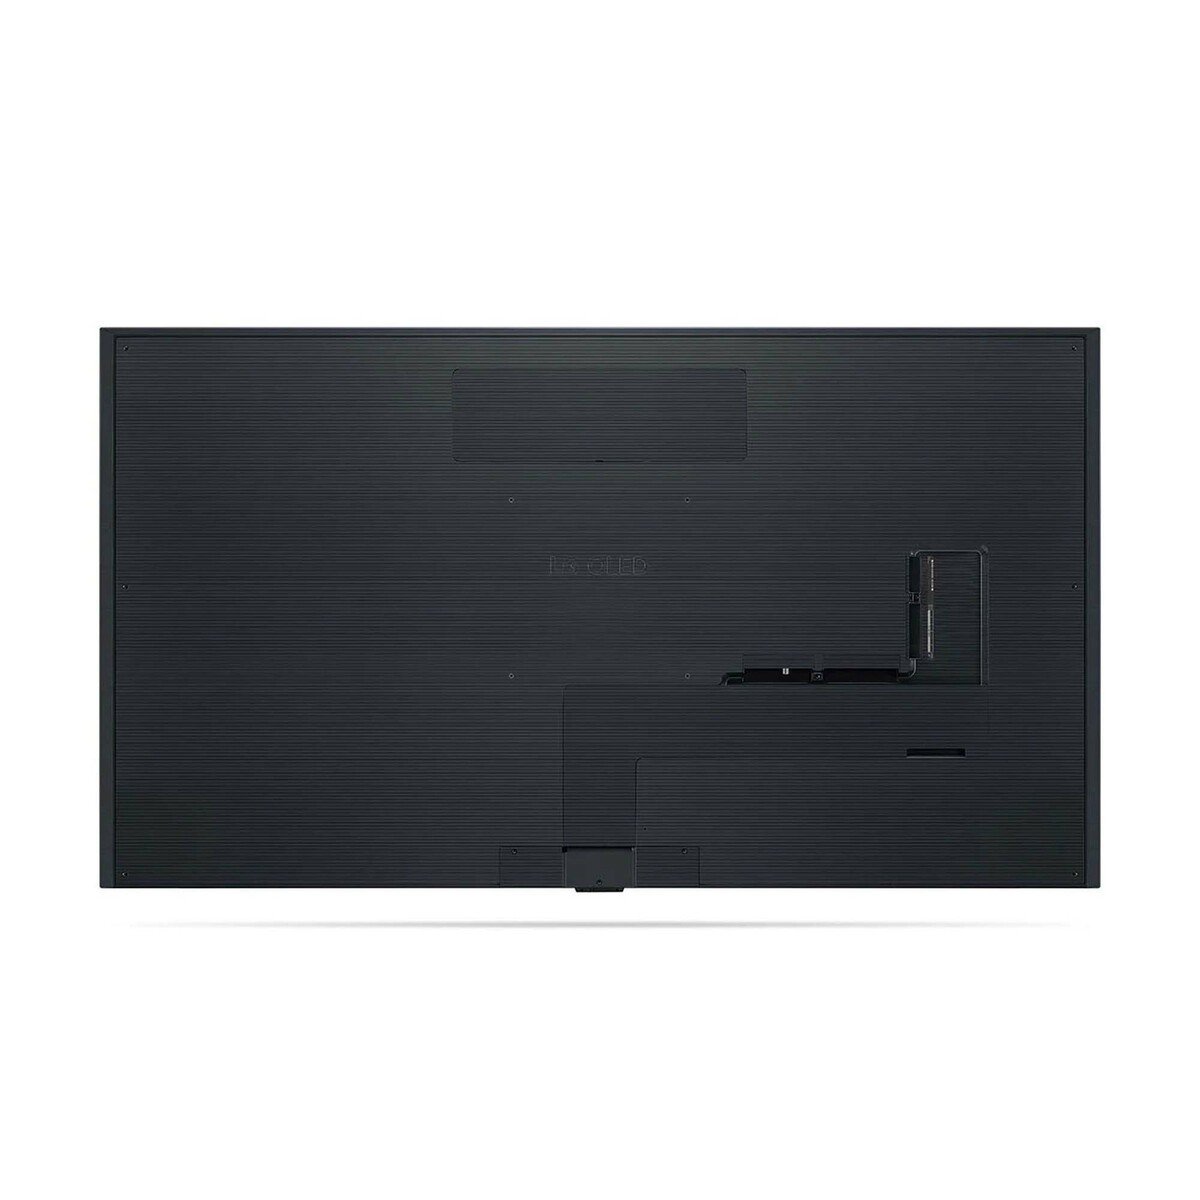 LG 4K Smart OLED TV OLED77G1PVA 77 Inch G1 Series Gallery Design